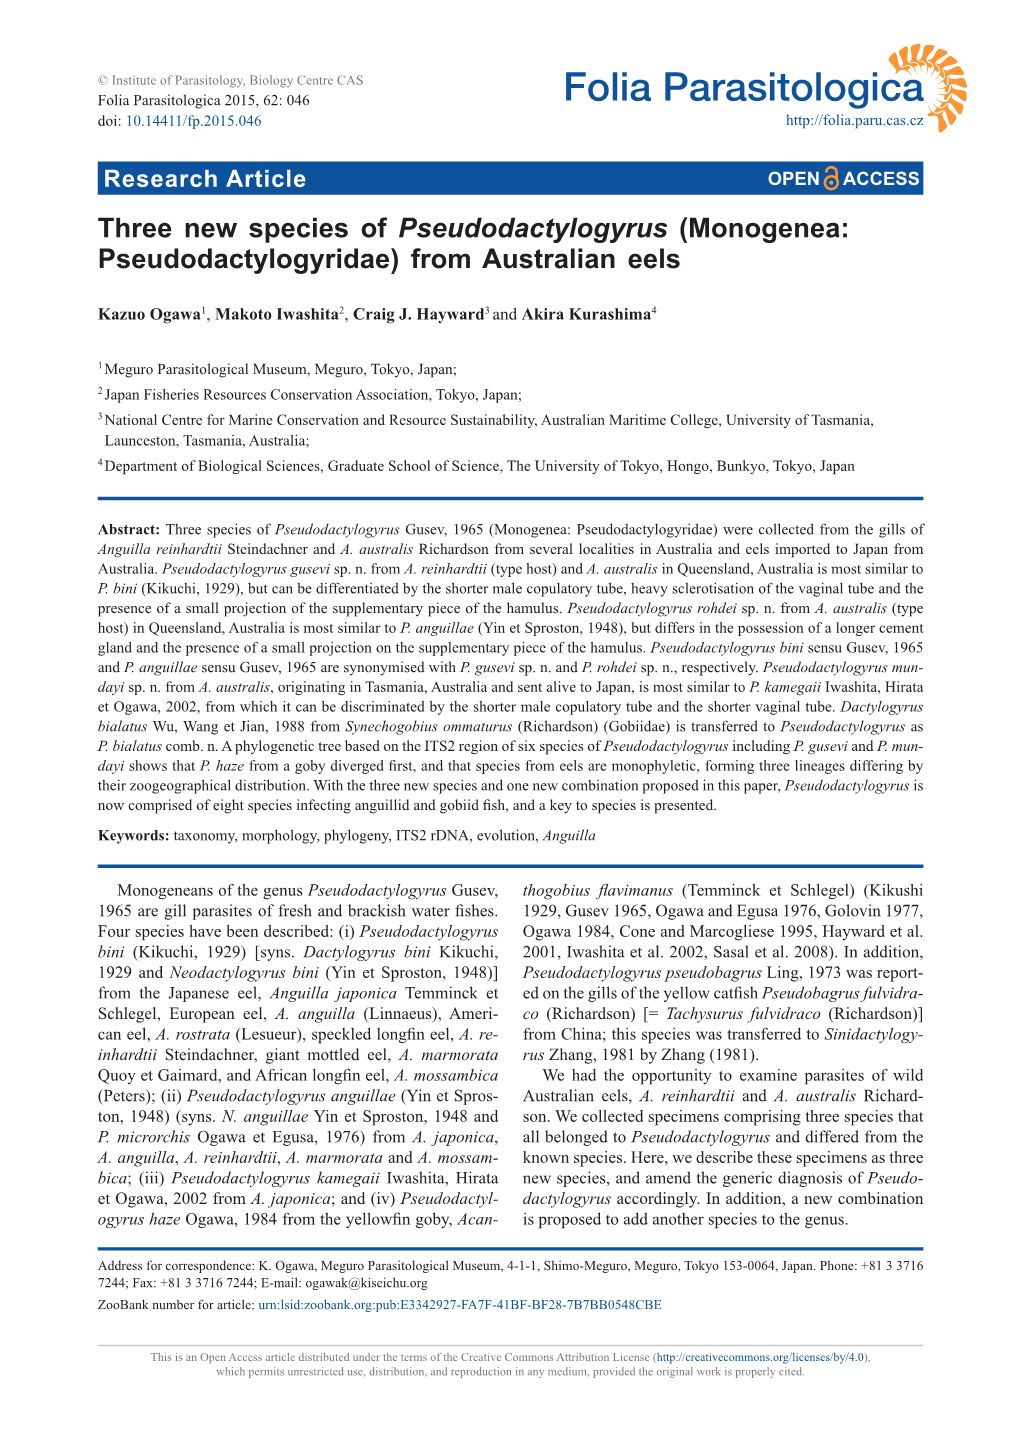 Three New Species of Pseudodactylogyrus (Monogenea: Pseudodactylogyridae) from Australian Eels